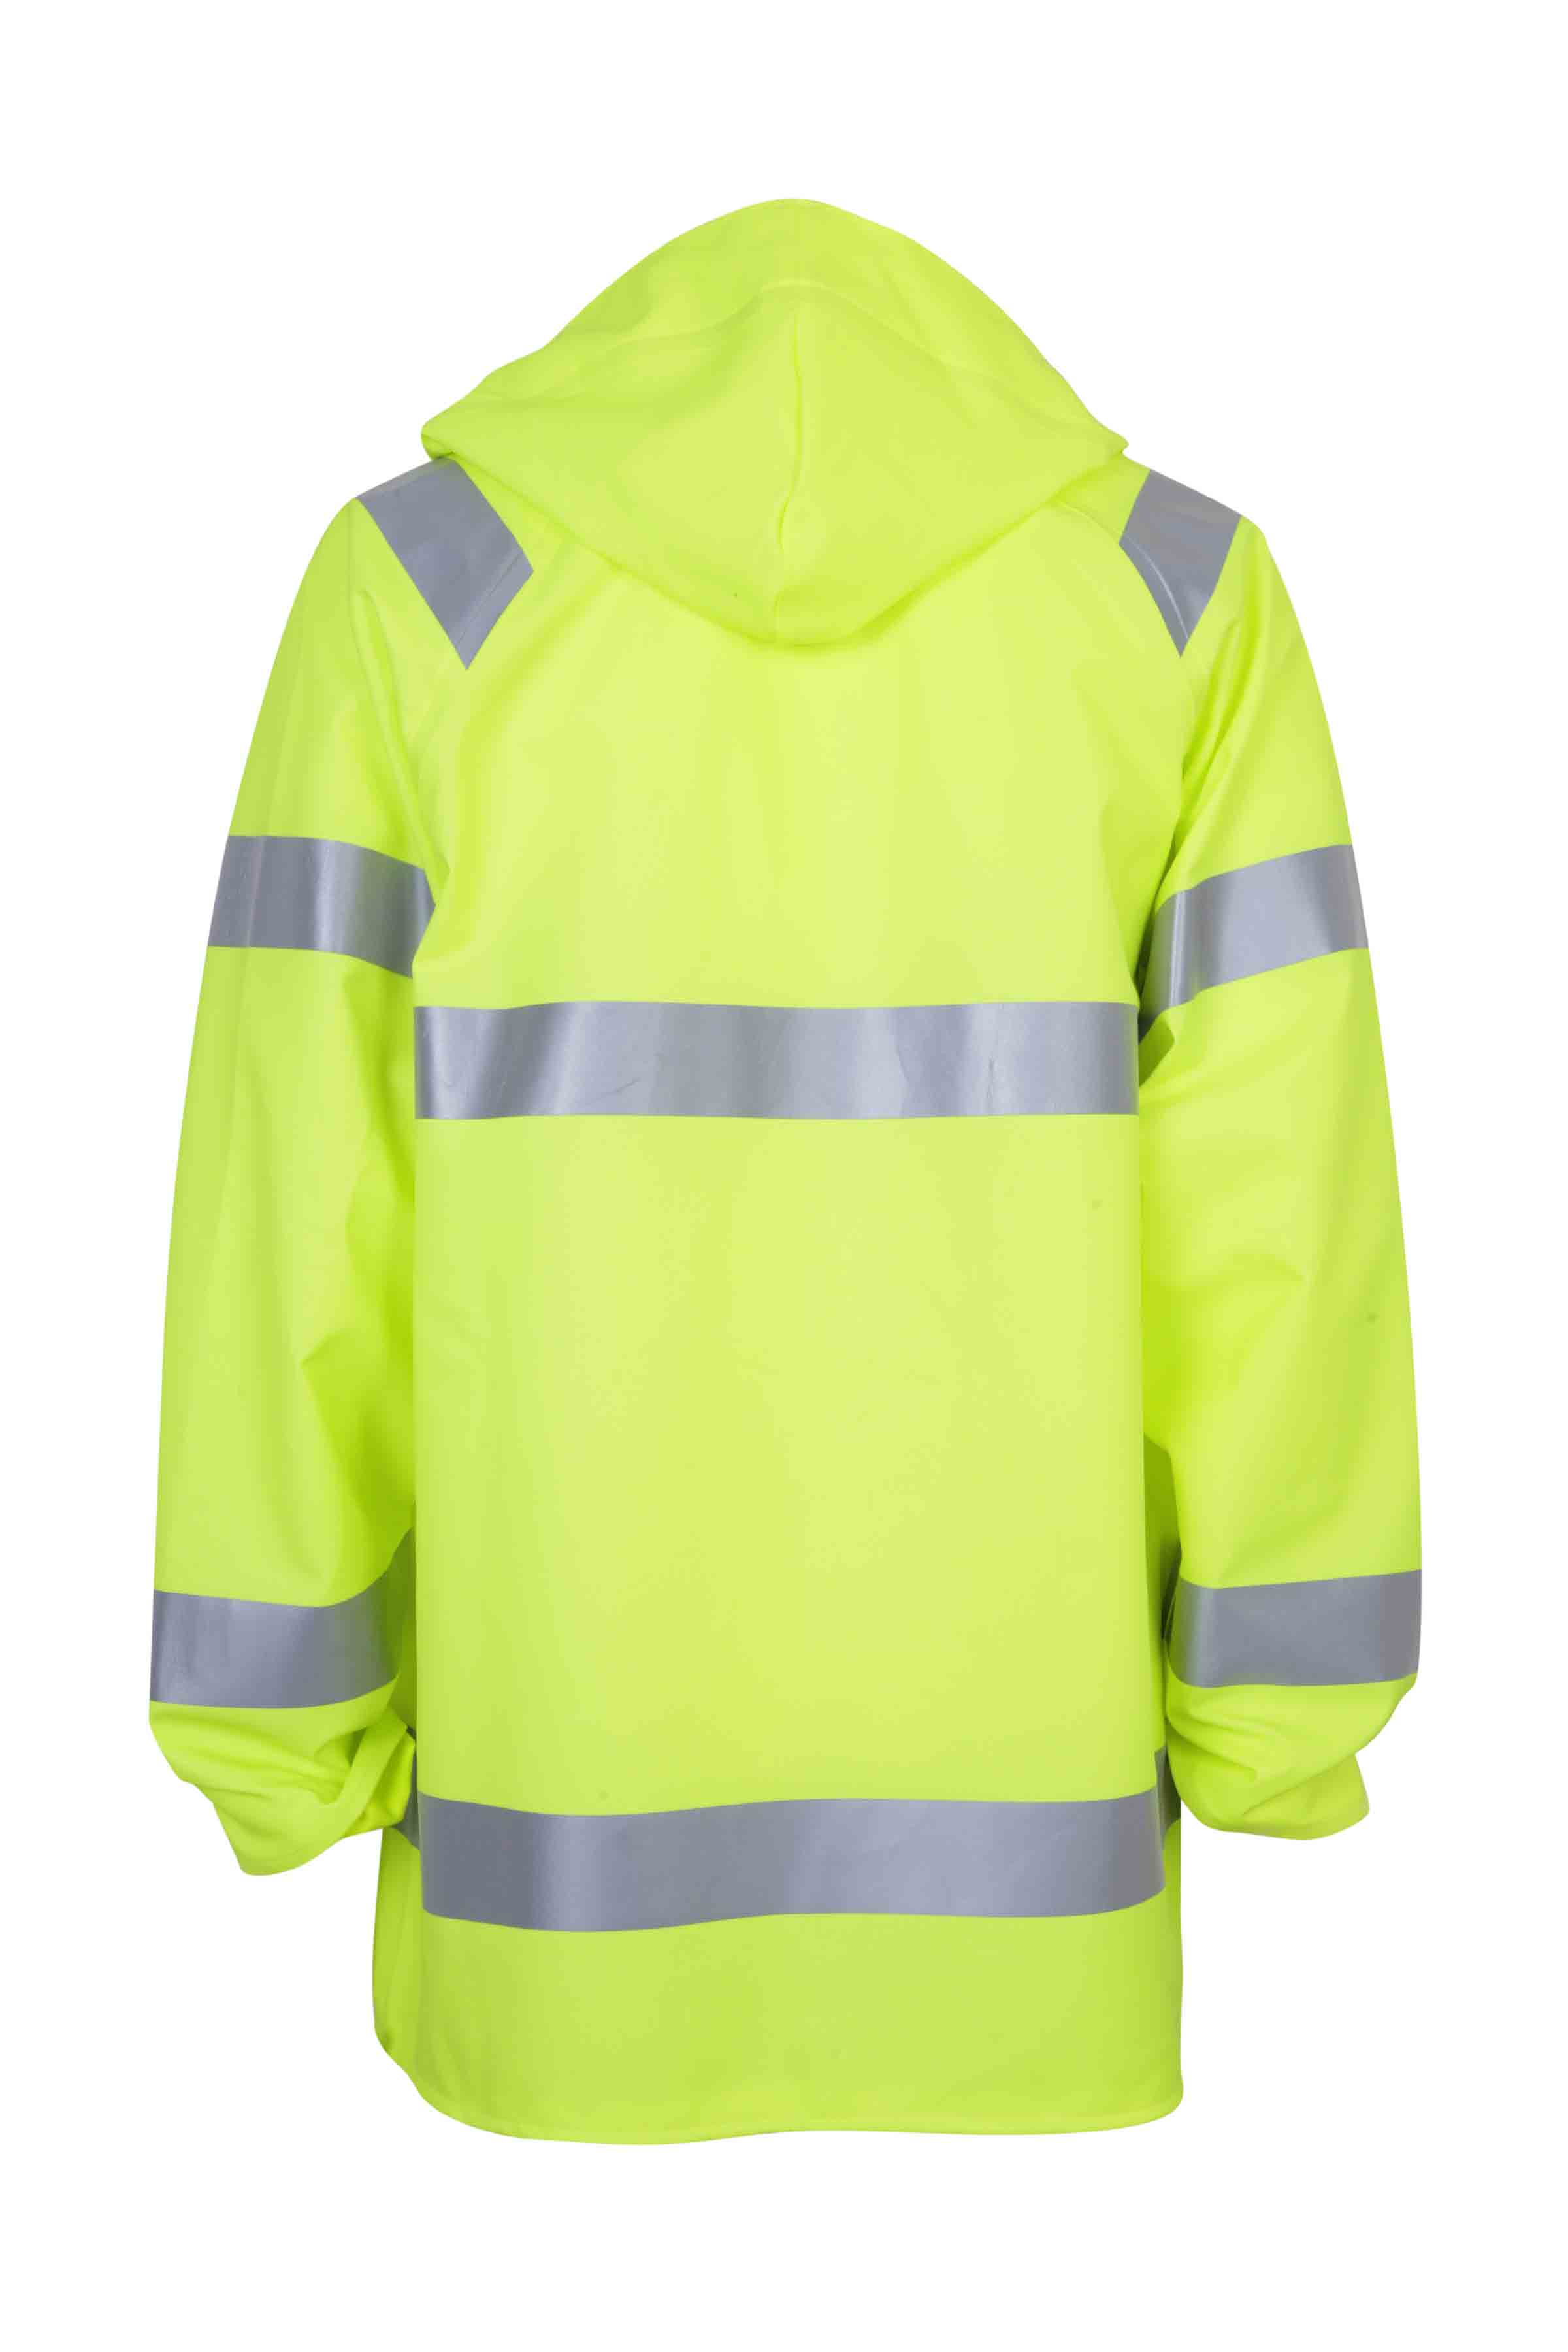 Waterproof ANSI Class 3 Work Coat for Men Reflective Hi Vis Orange Yellow/Green Pioneer Ripstop High Visibility Rain Gear Safety Jacket 